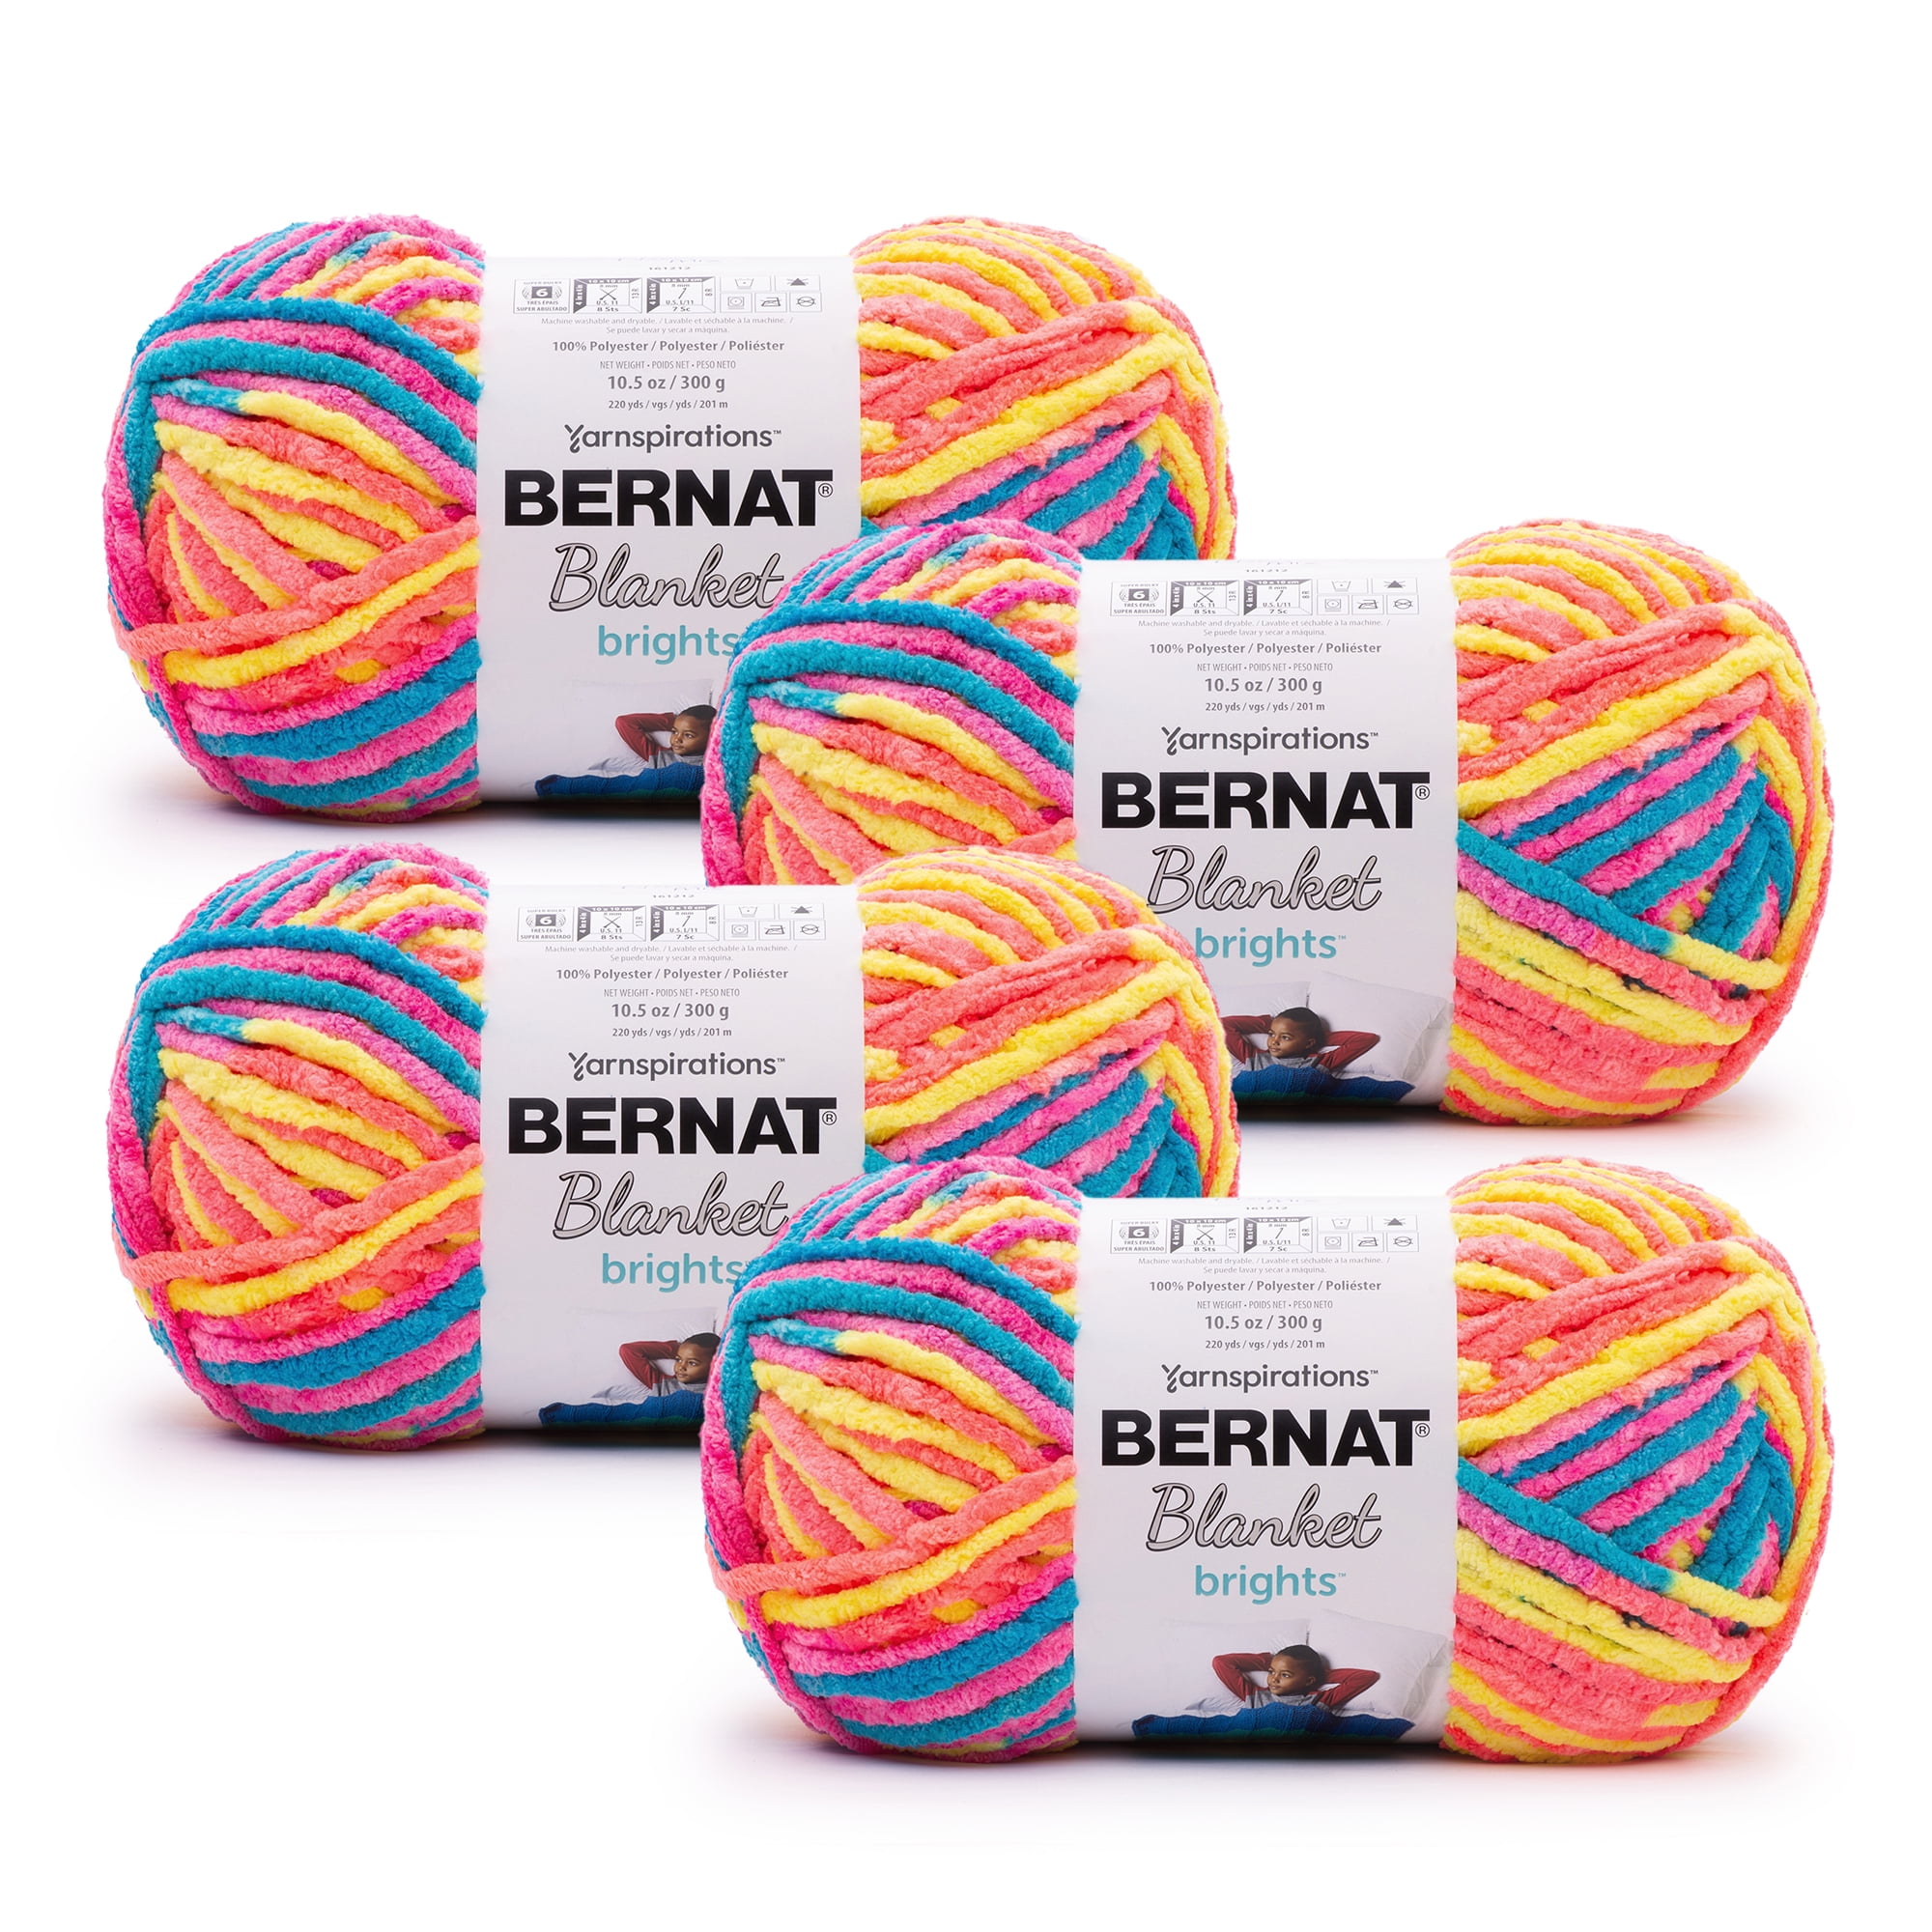 Bernat Blanket Brights Yarn-Pow Purple, 1 count - Smith's Food and Drug